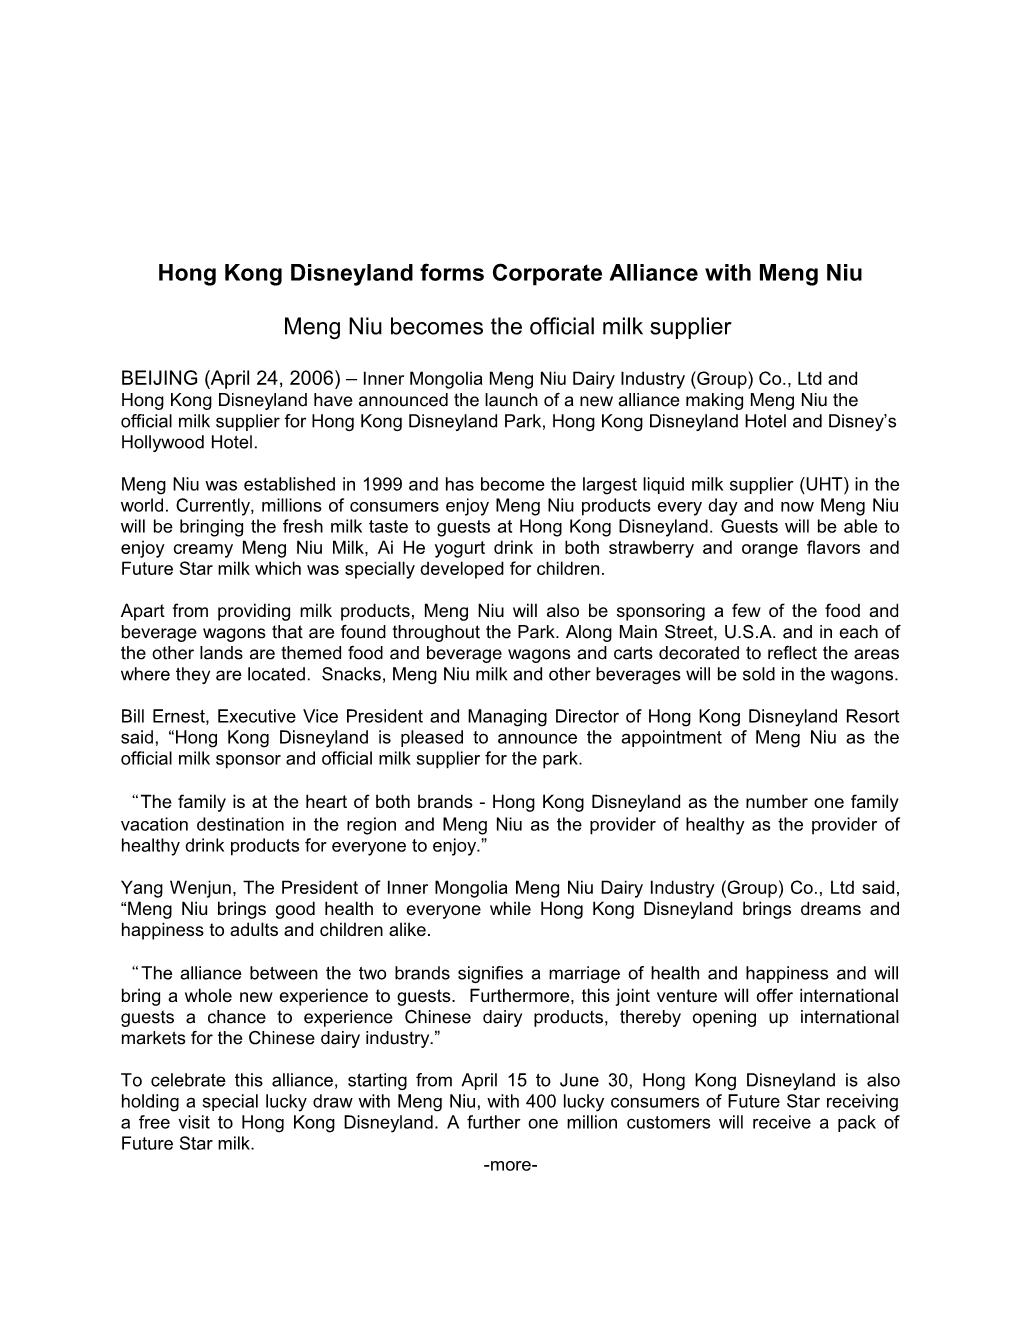 Hong Kong Disneyland Forms Corporate Alliance with Meng Niu